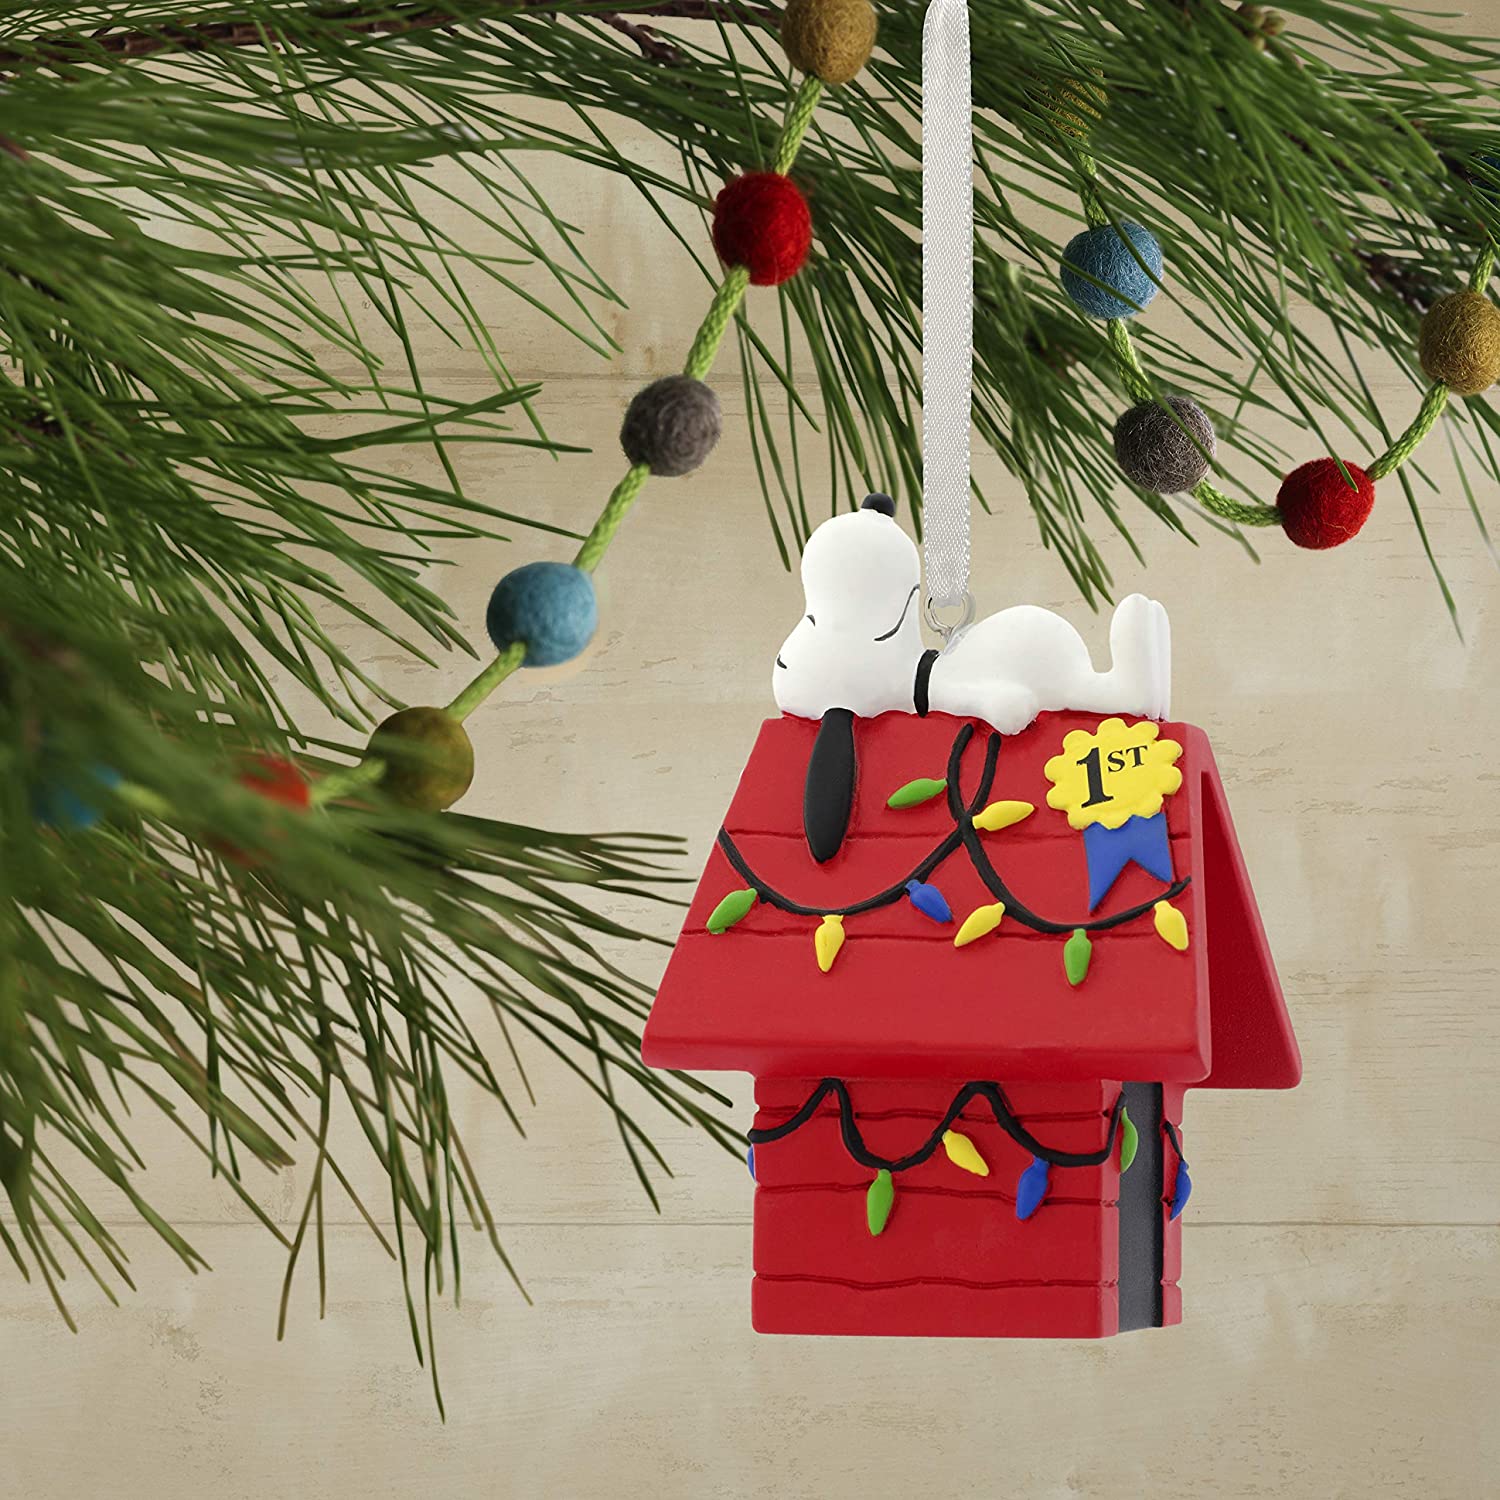 Hallmark Christmas Ornaments, Peanuts Snoopy on Decorated Dog House Ornament